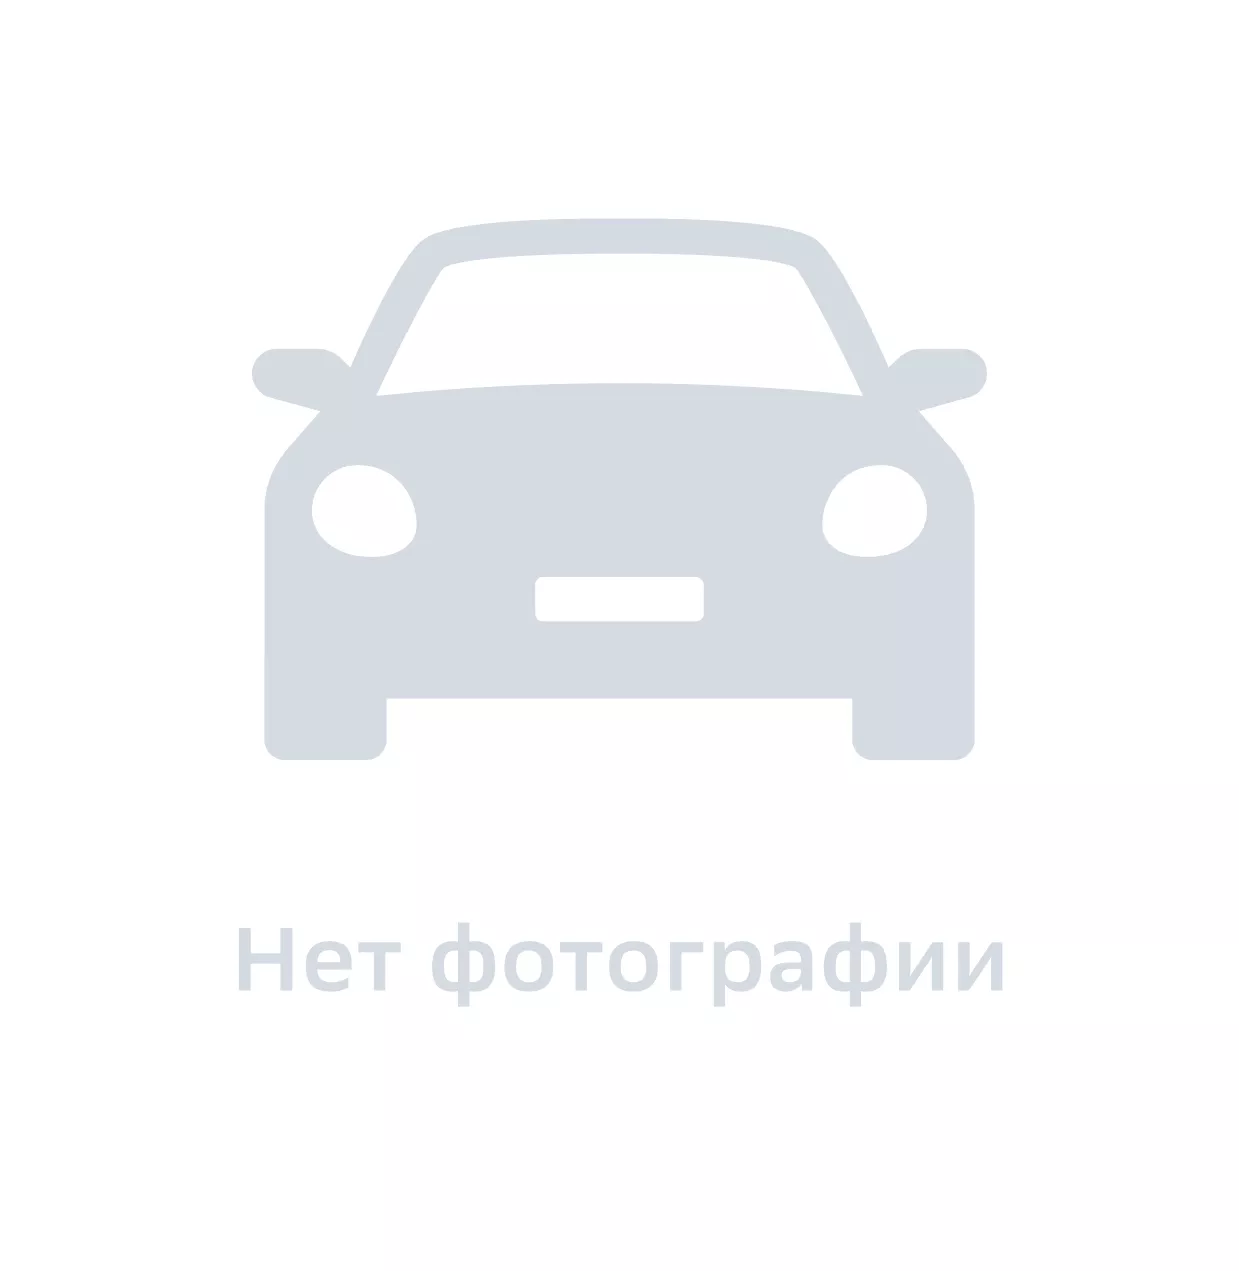 Фара передняя корректор, Ukorauto, арт. UDW9E21912, цена за 1 шт.